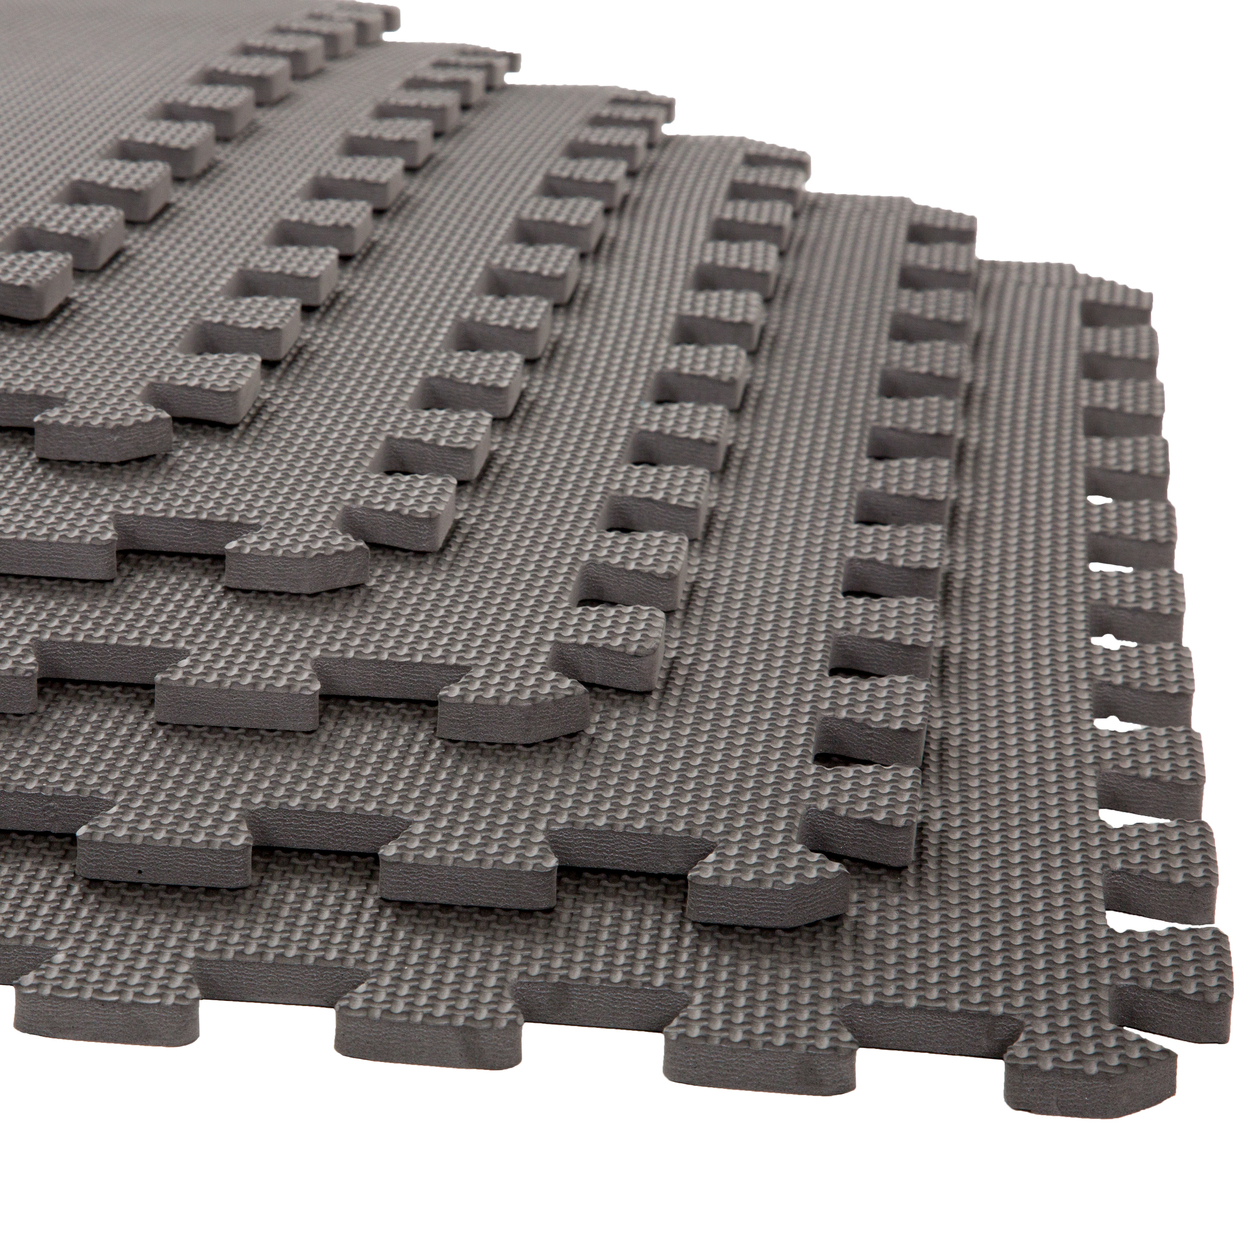 Garage Basement Foam Flooring - 6 Pc - 2' X 2' Tiles 24 Square Feet Gray 3/8